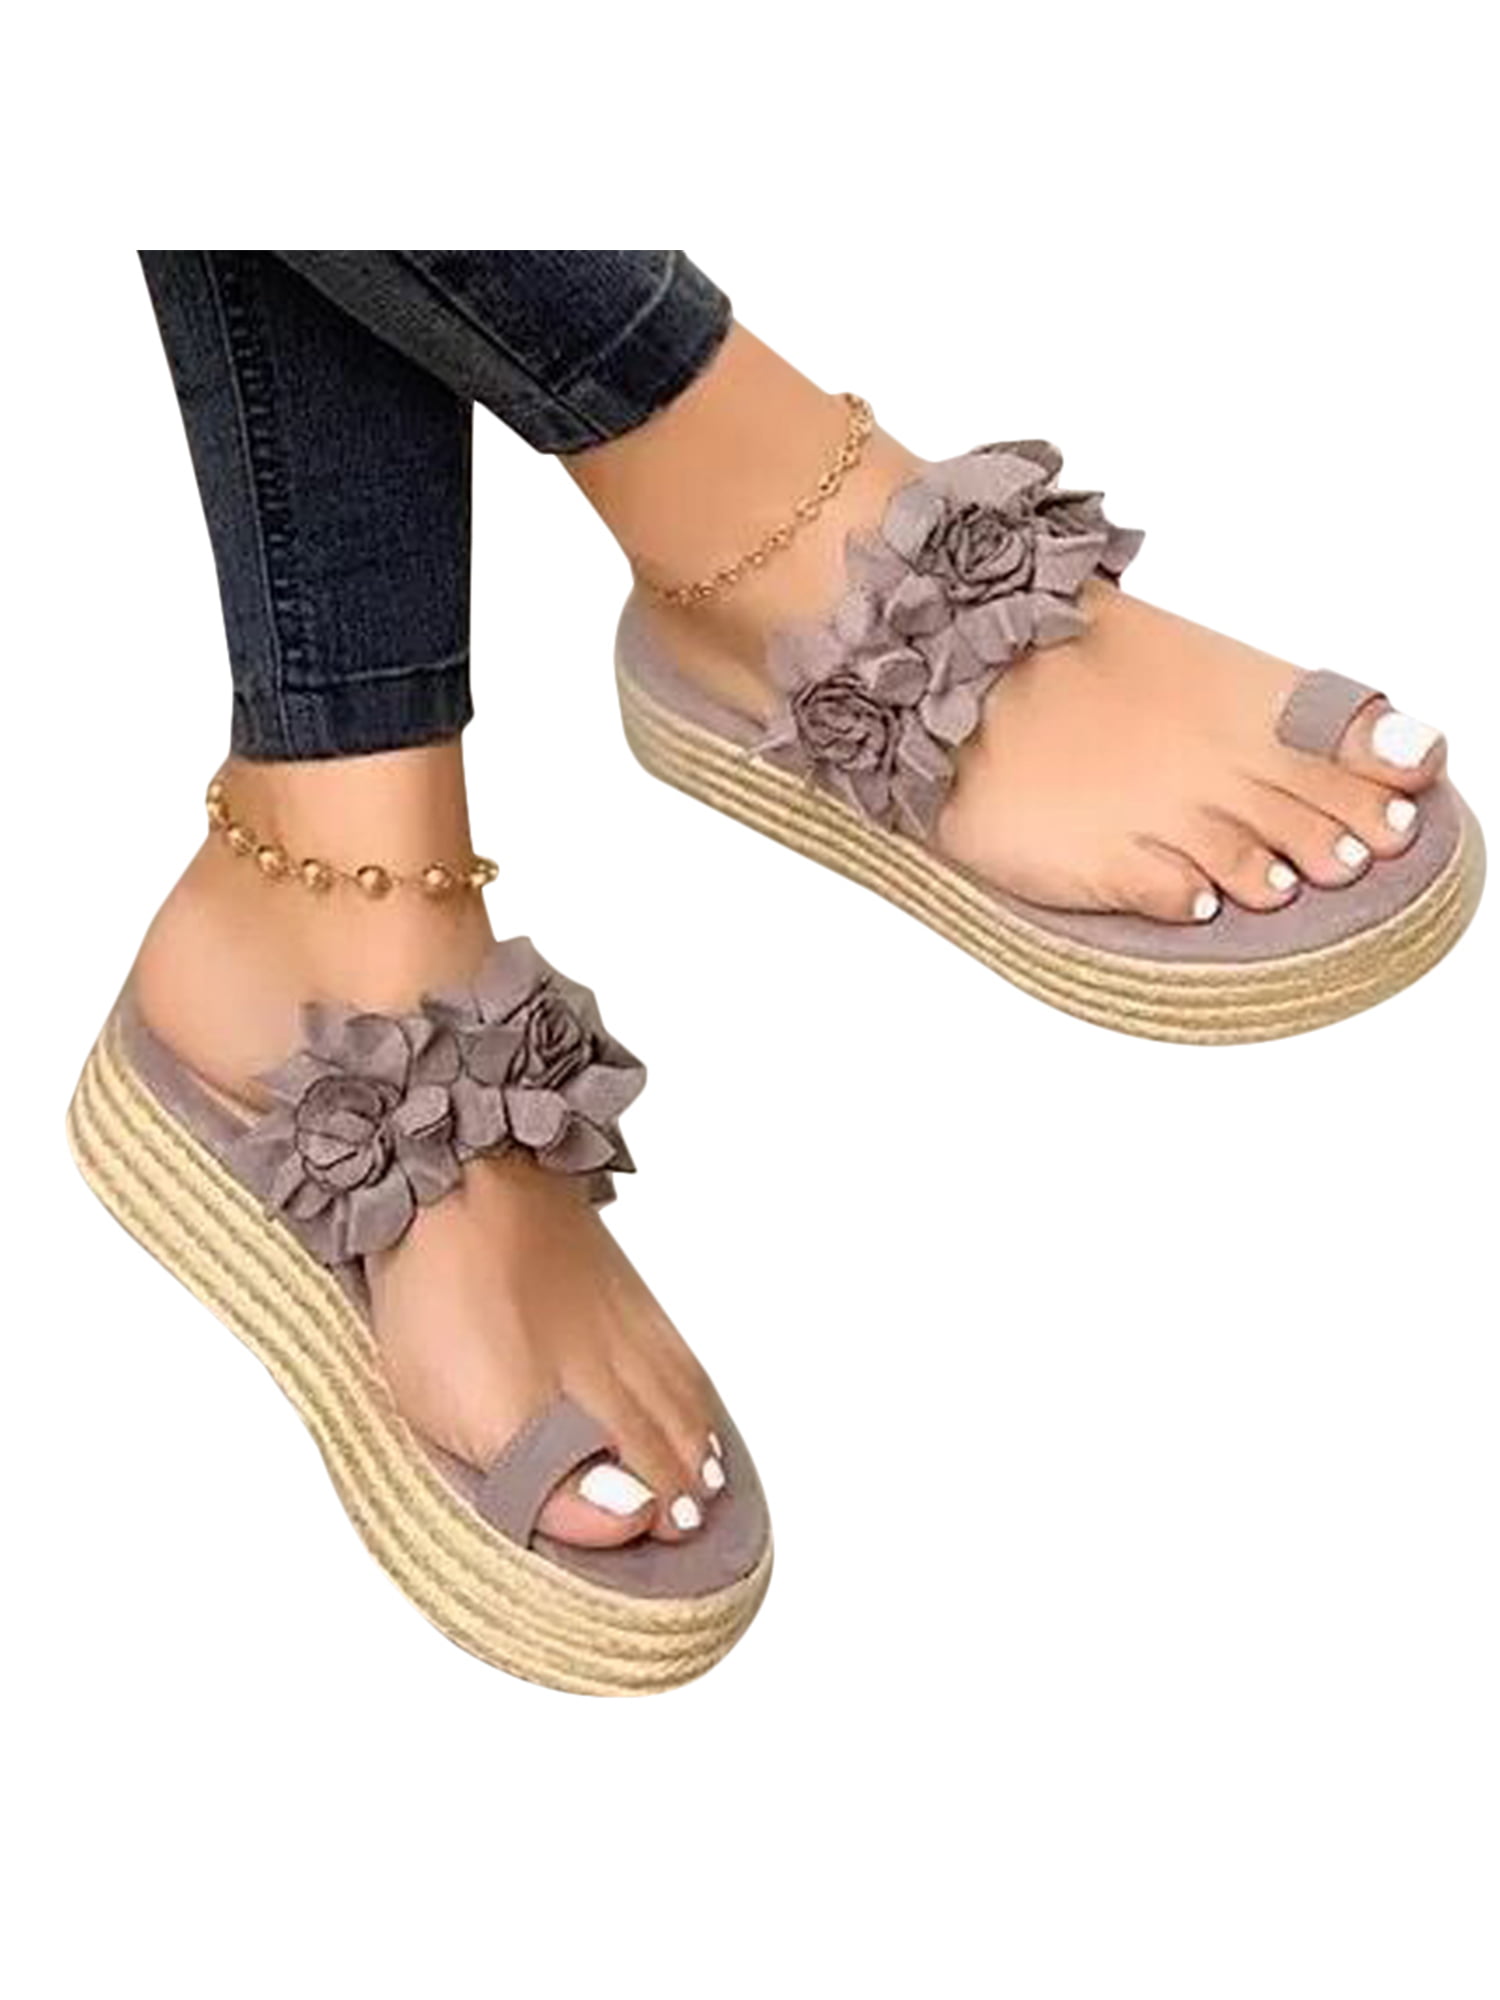 Women Wedge Sandals Platform Flower Slipper Casual Beach Holiday Flip Flops Shoe 